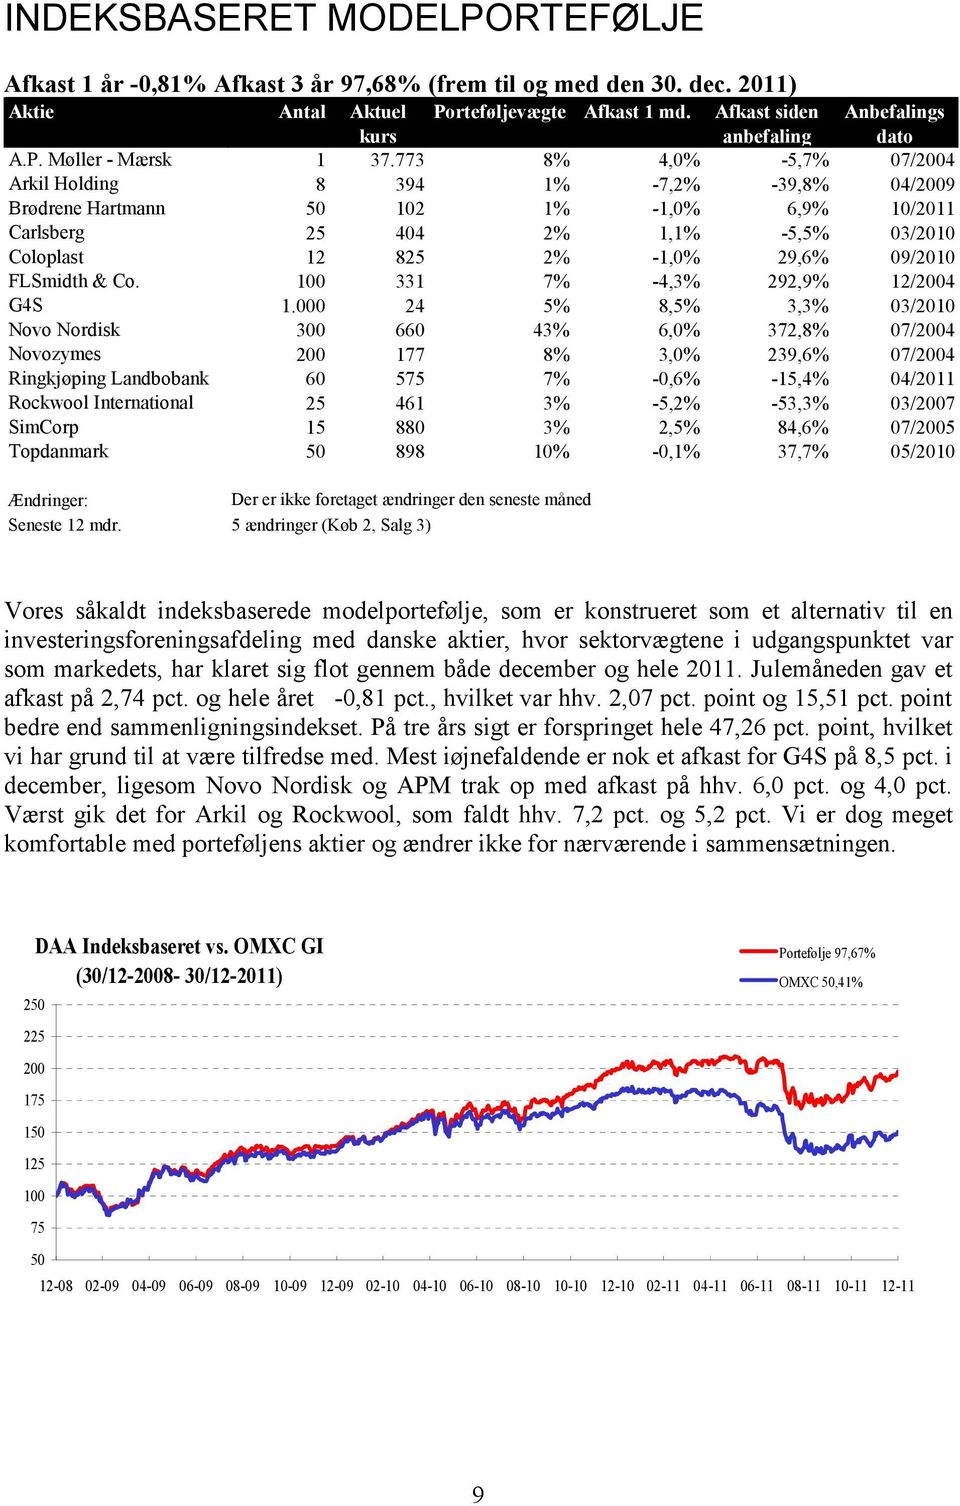 773 8% 4, 5,7% 07/2004 Arkil Holding 8 394 1% 7,2% 39,8% 04/2009 Brødrene Hartmann 50 102 1% 1, 6,9% 10/2011 Carlsberg 25 404 2% 1,1% 5,5% 03/2010 Coloplast 12 825 2% 1, 29,6% 09/2010 FLSmidth & Co.